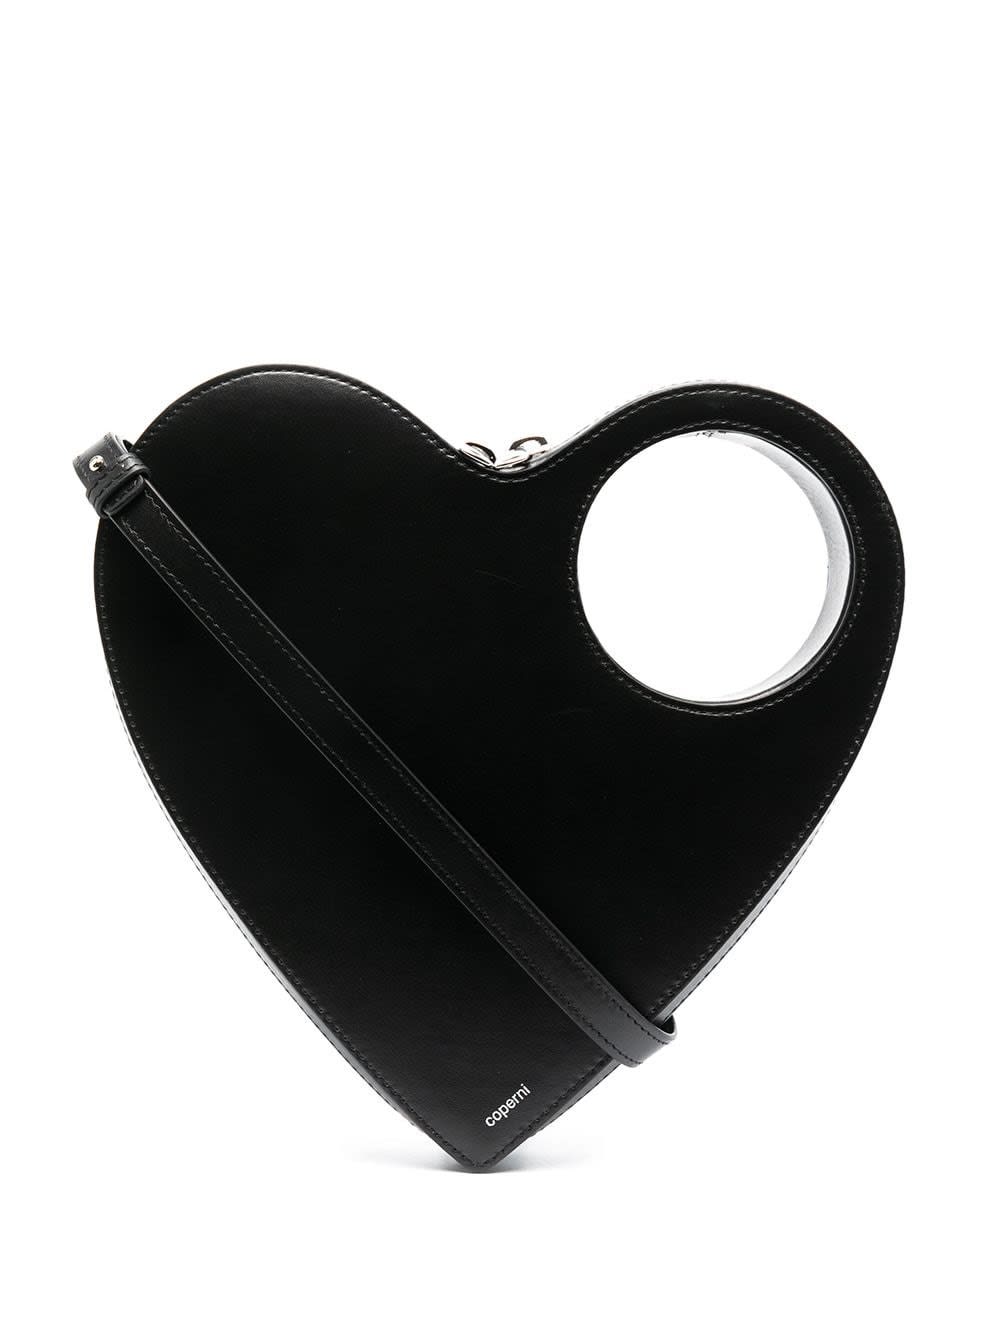 Coperni Heart Handbag In Black Leather